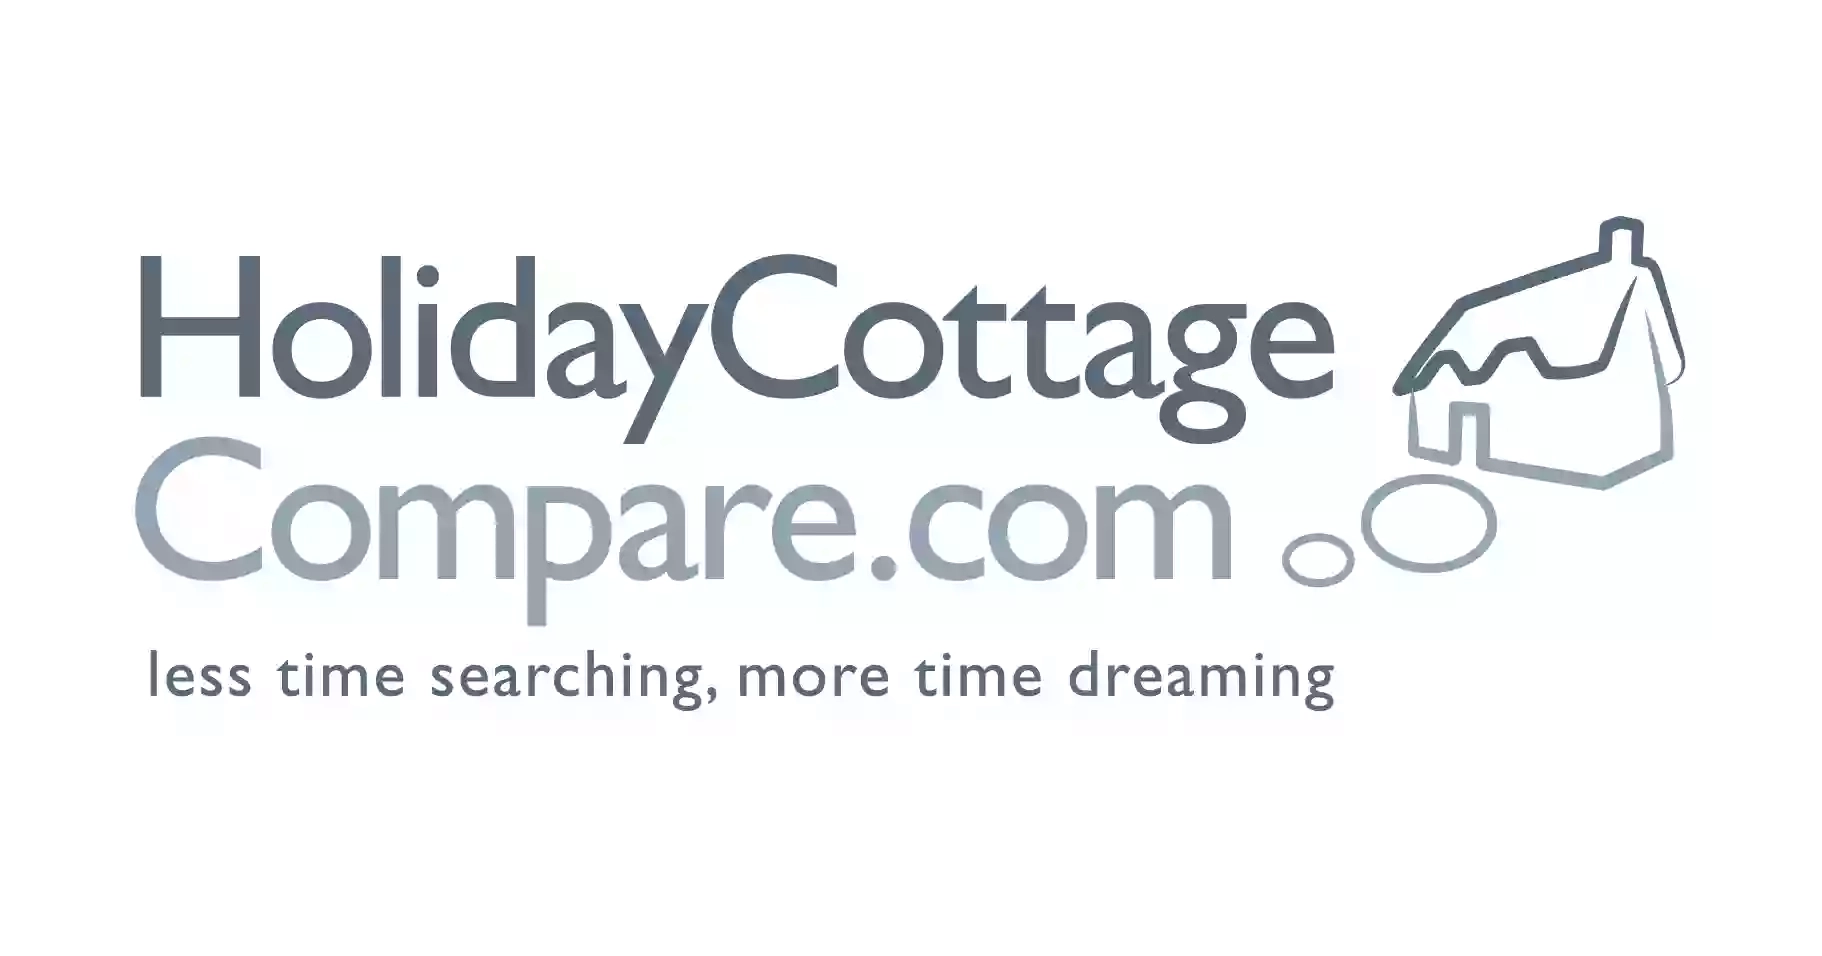 Holiday Cottage Compare.com